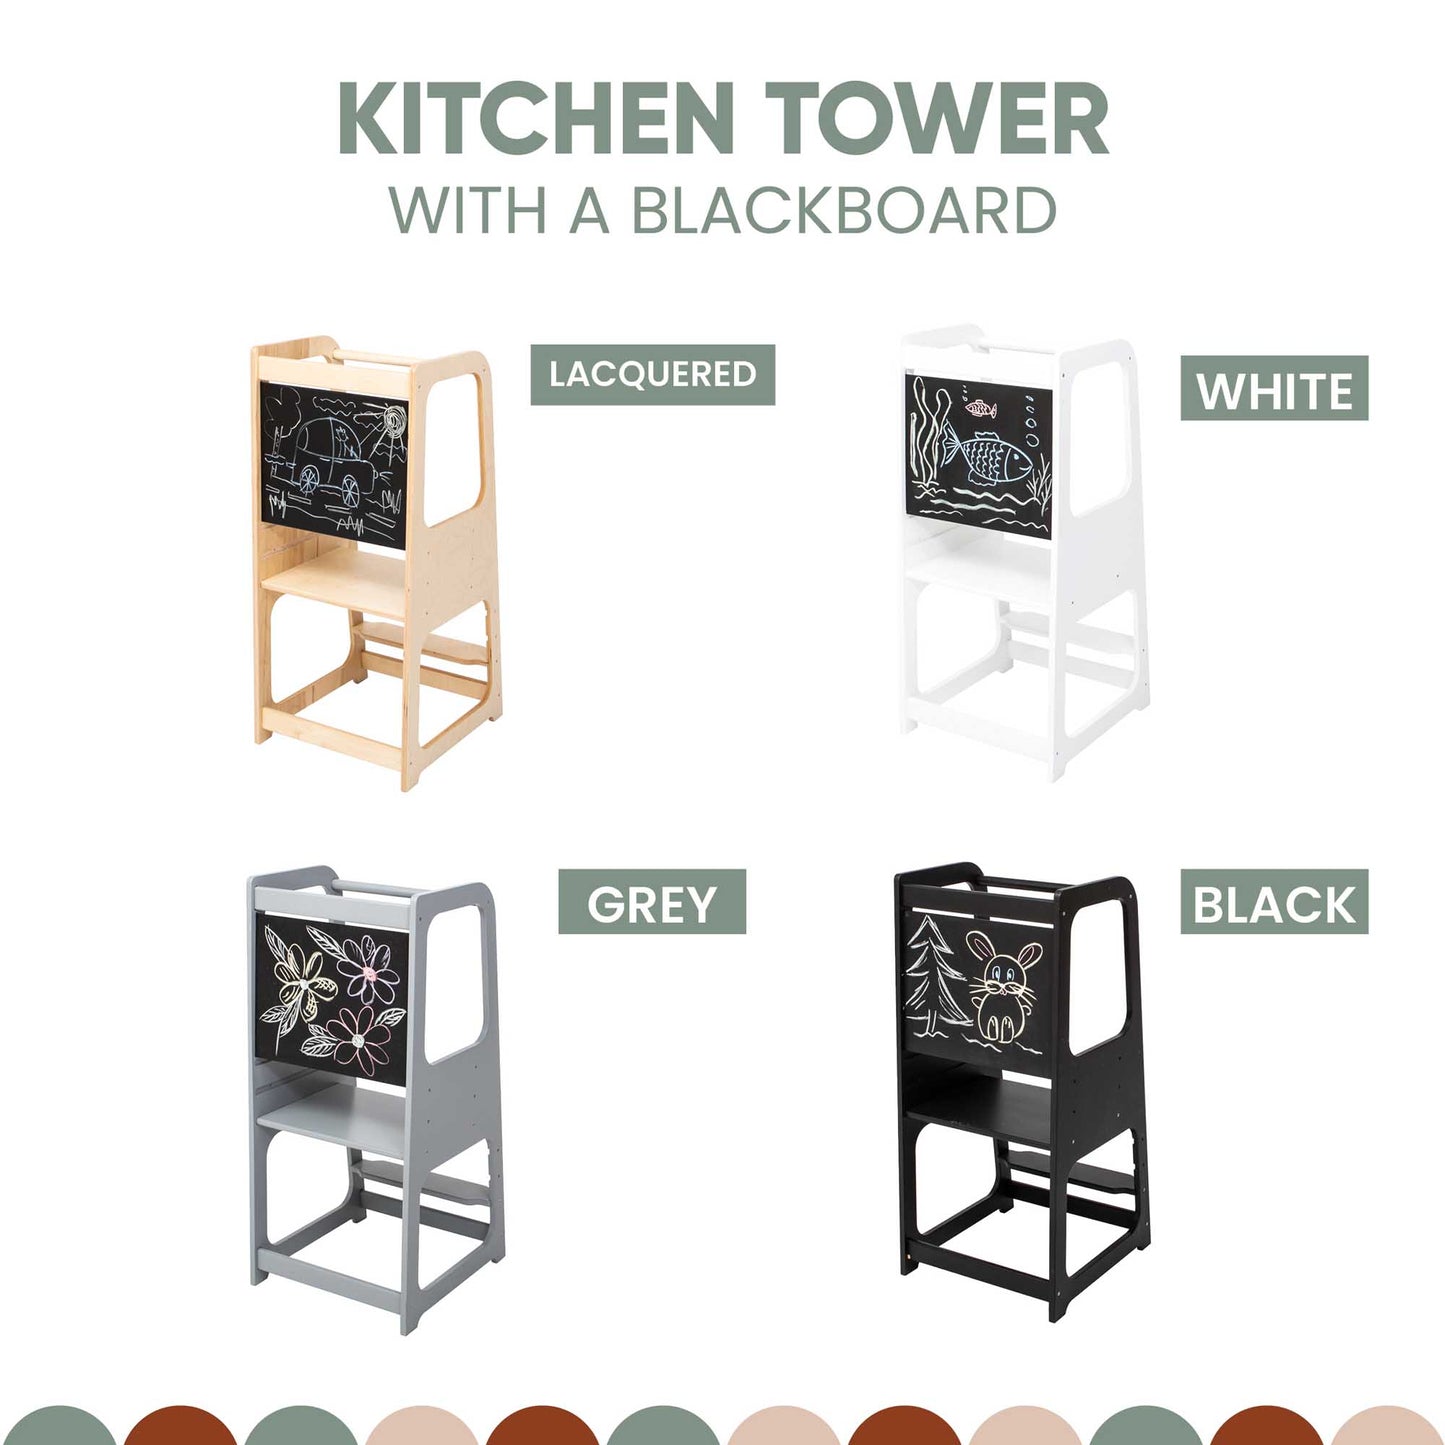 Kitchen tower with blackboard